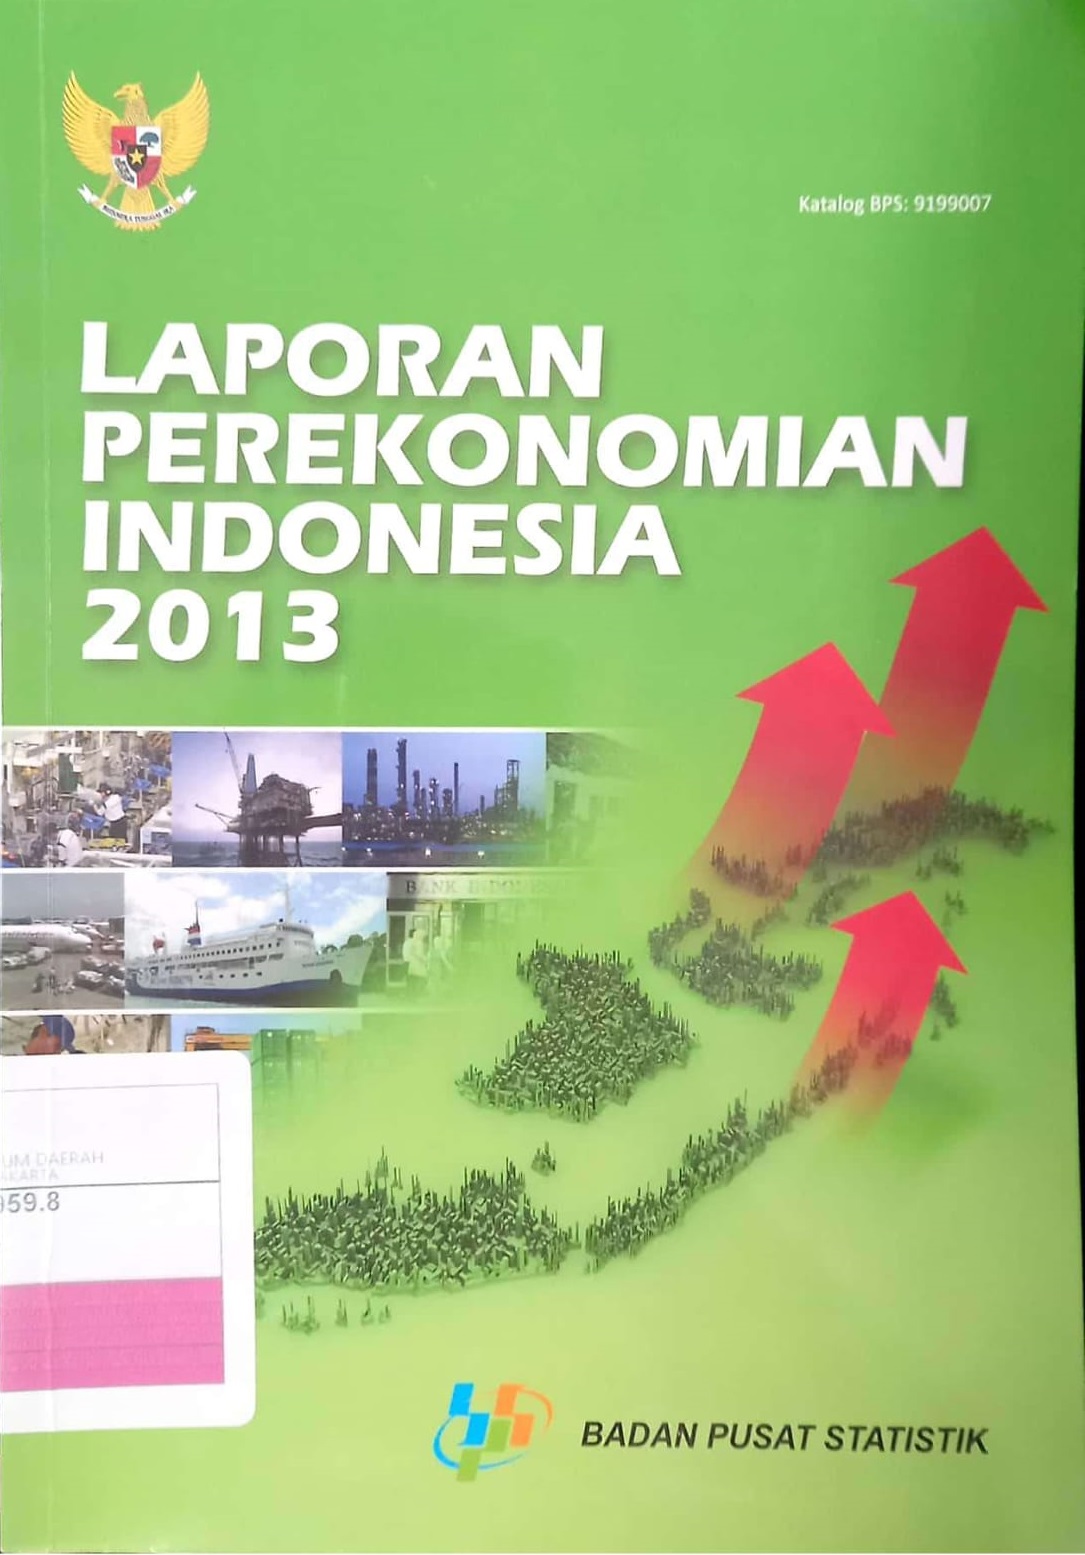 Laporan perekonomian Indonesia 2013